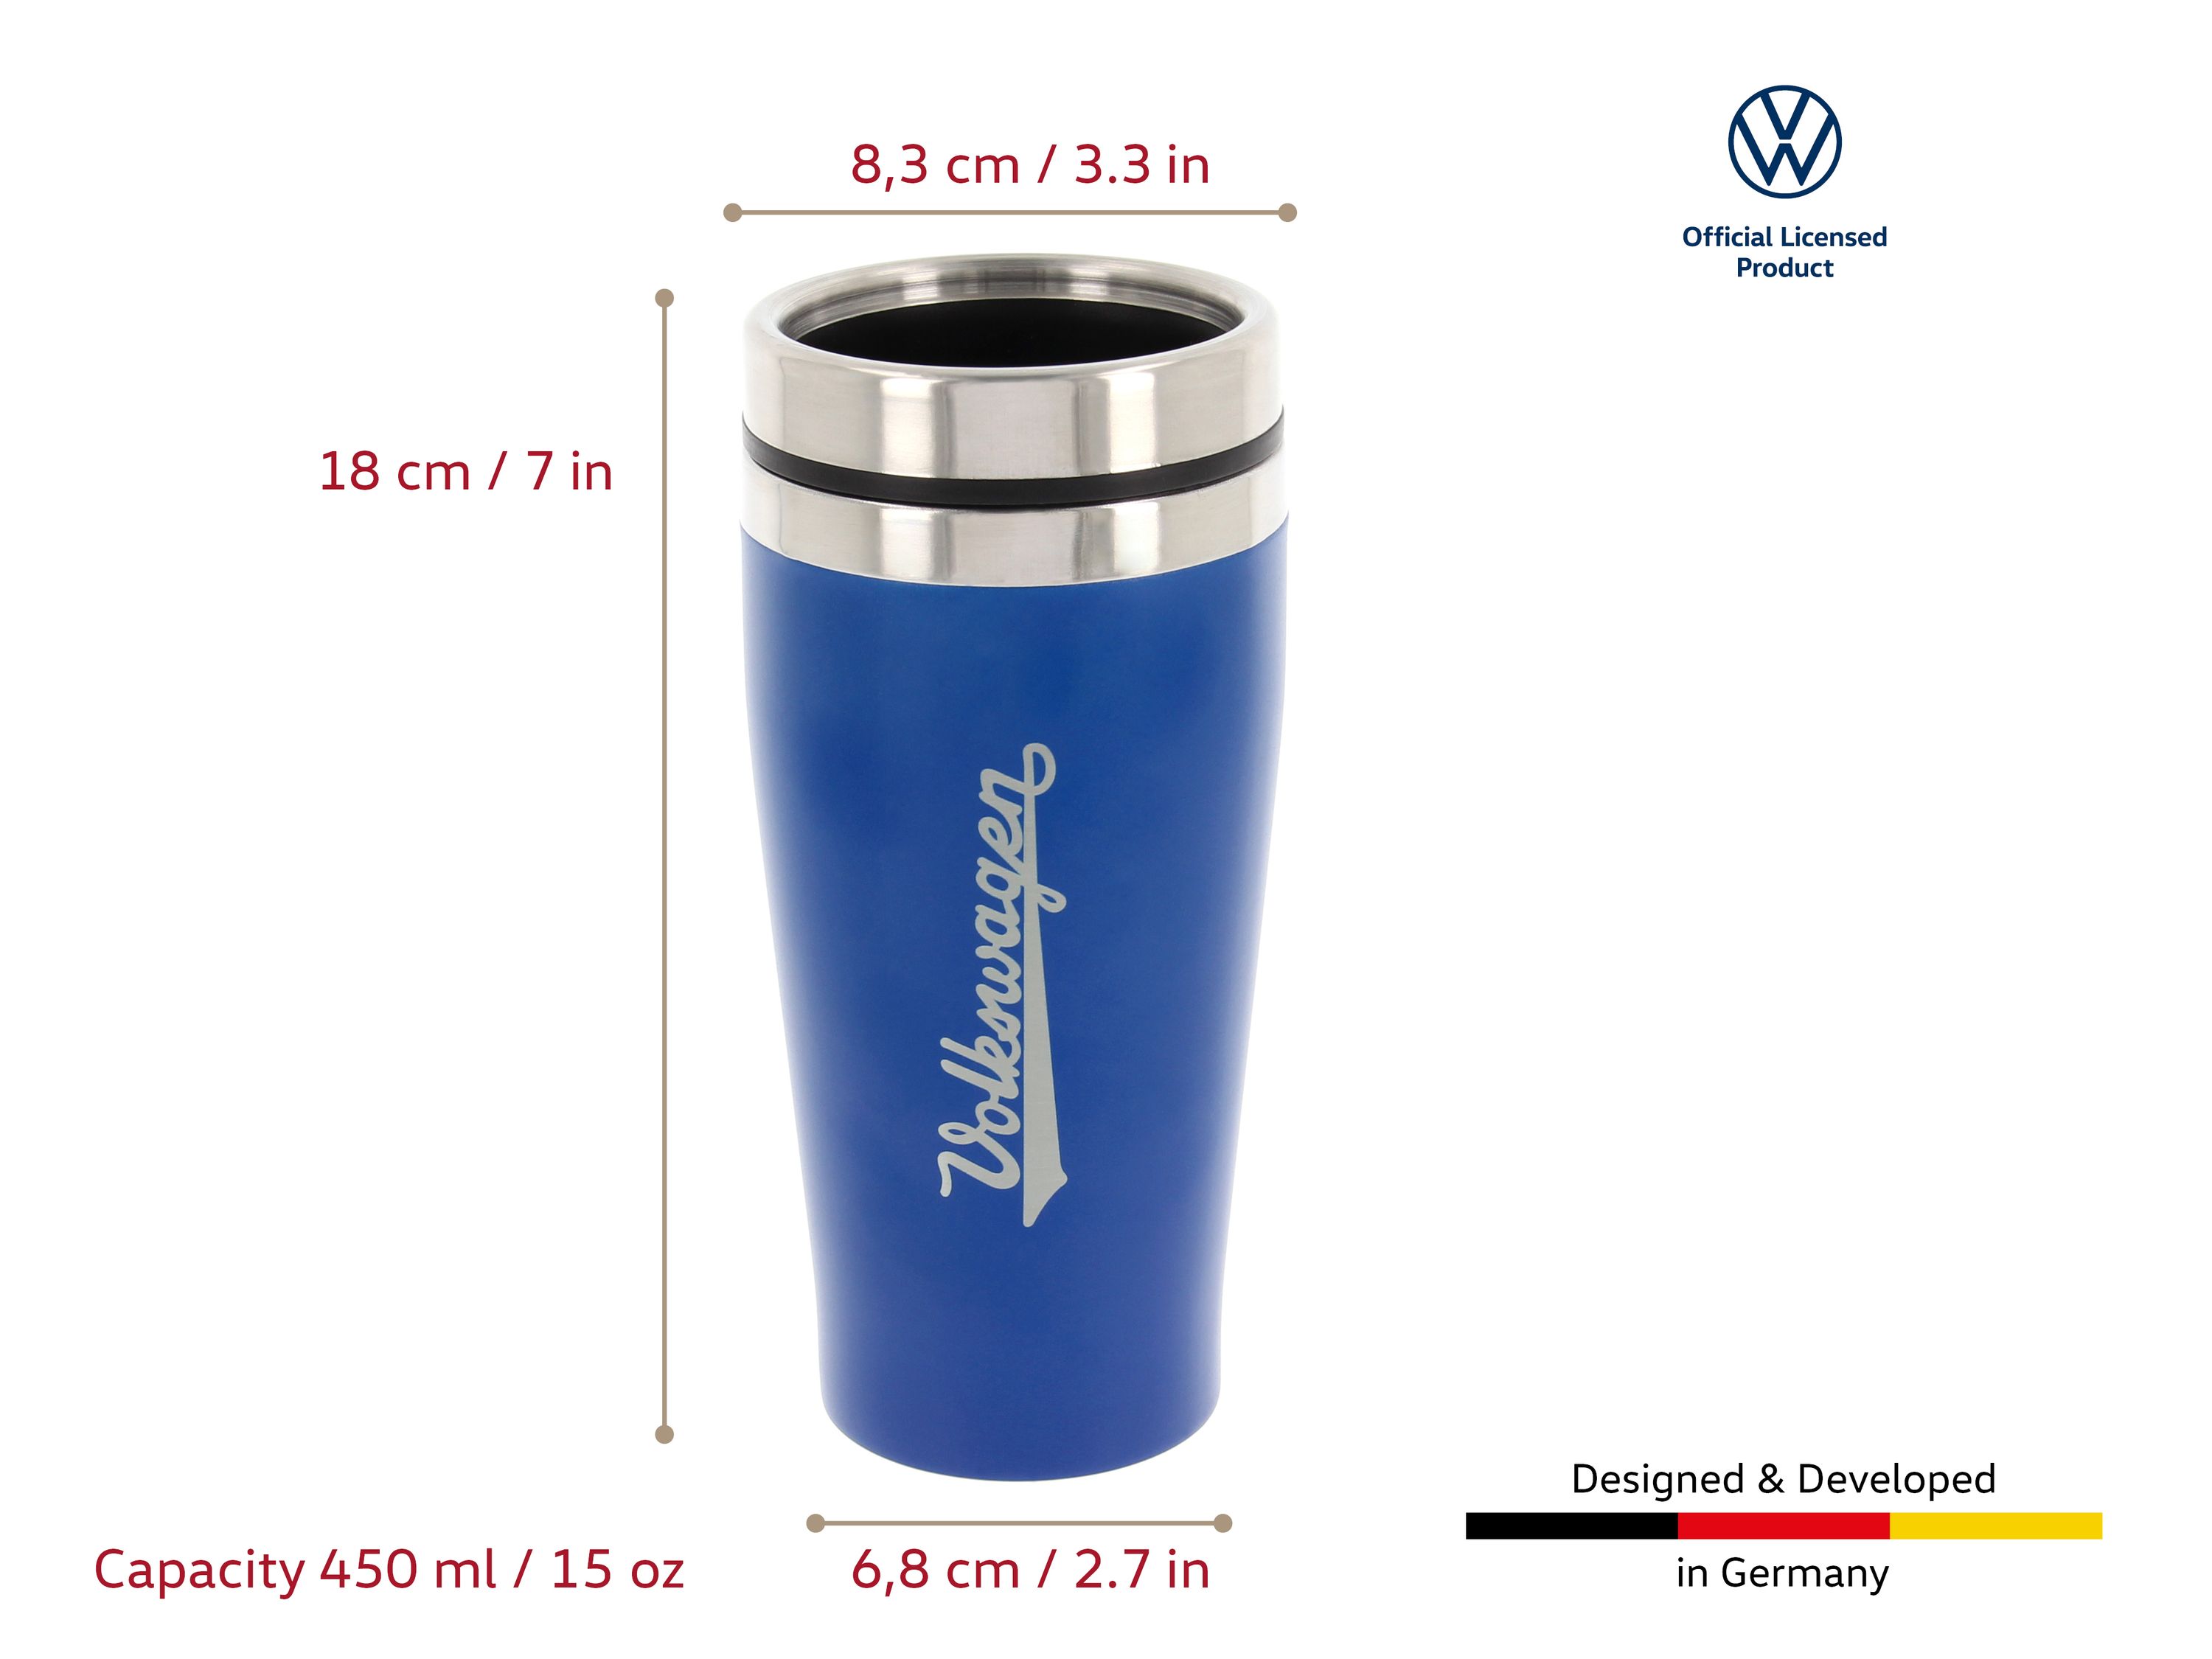 VW Edelstahl Thermo-Becher, doppelwandig, 450ml